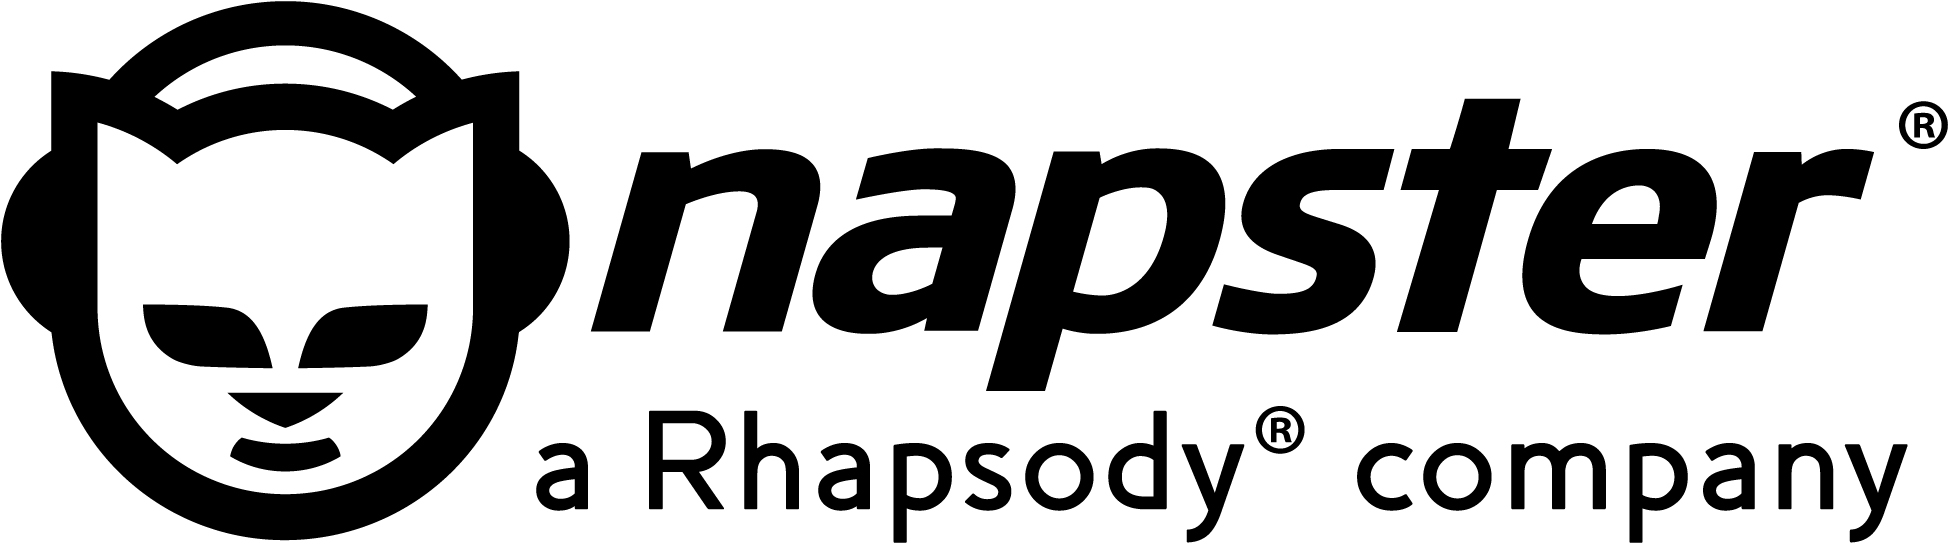 Napster PNG-PlusPNG.com-606